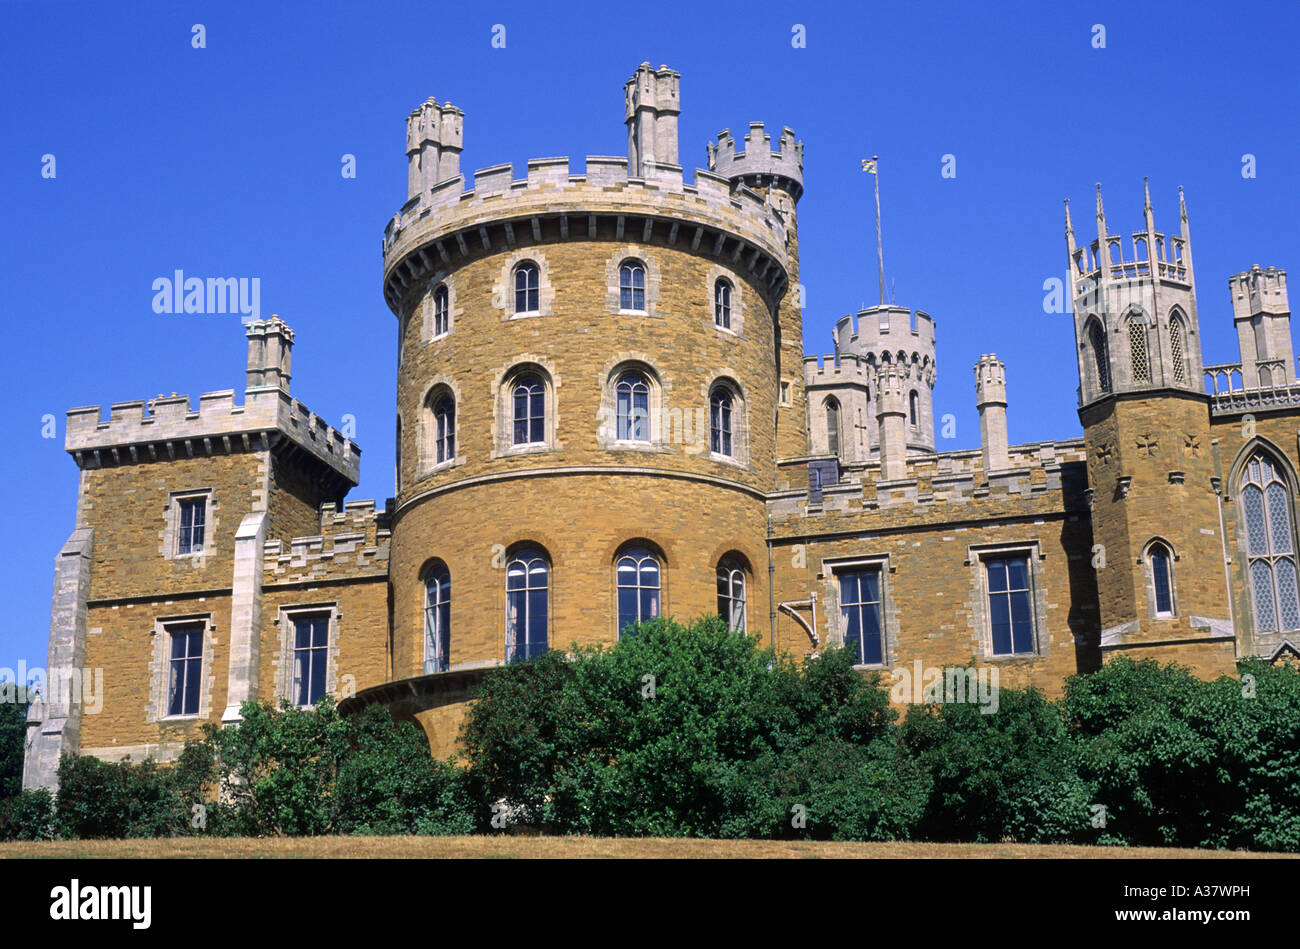 Belvoir Castle, Leicestershire, English ancestral stately home, England, UK, travel, tourism, architecture, romantic battlements Stock Photo